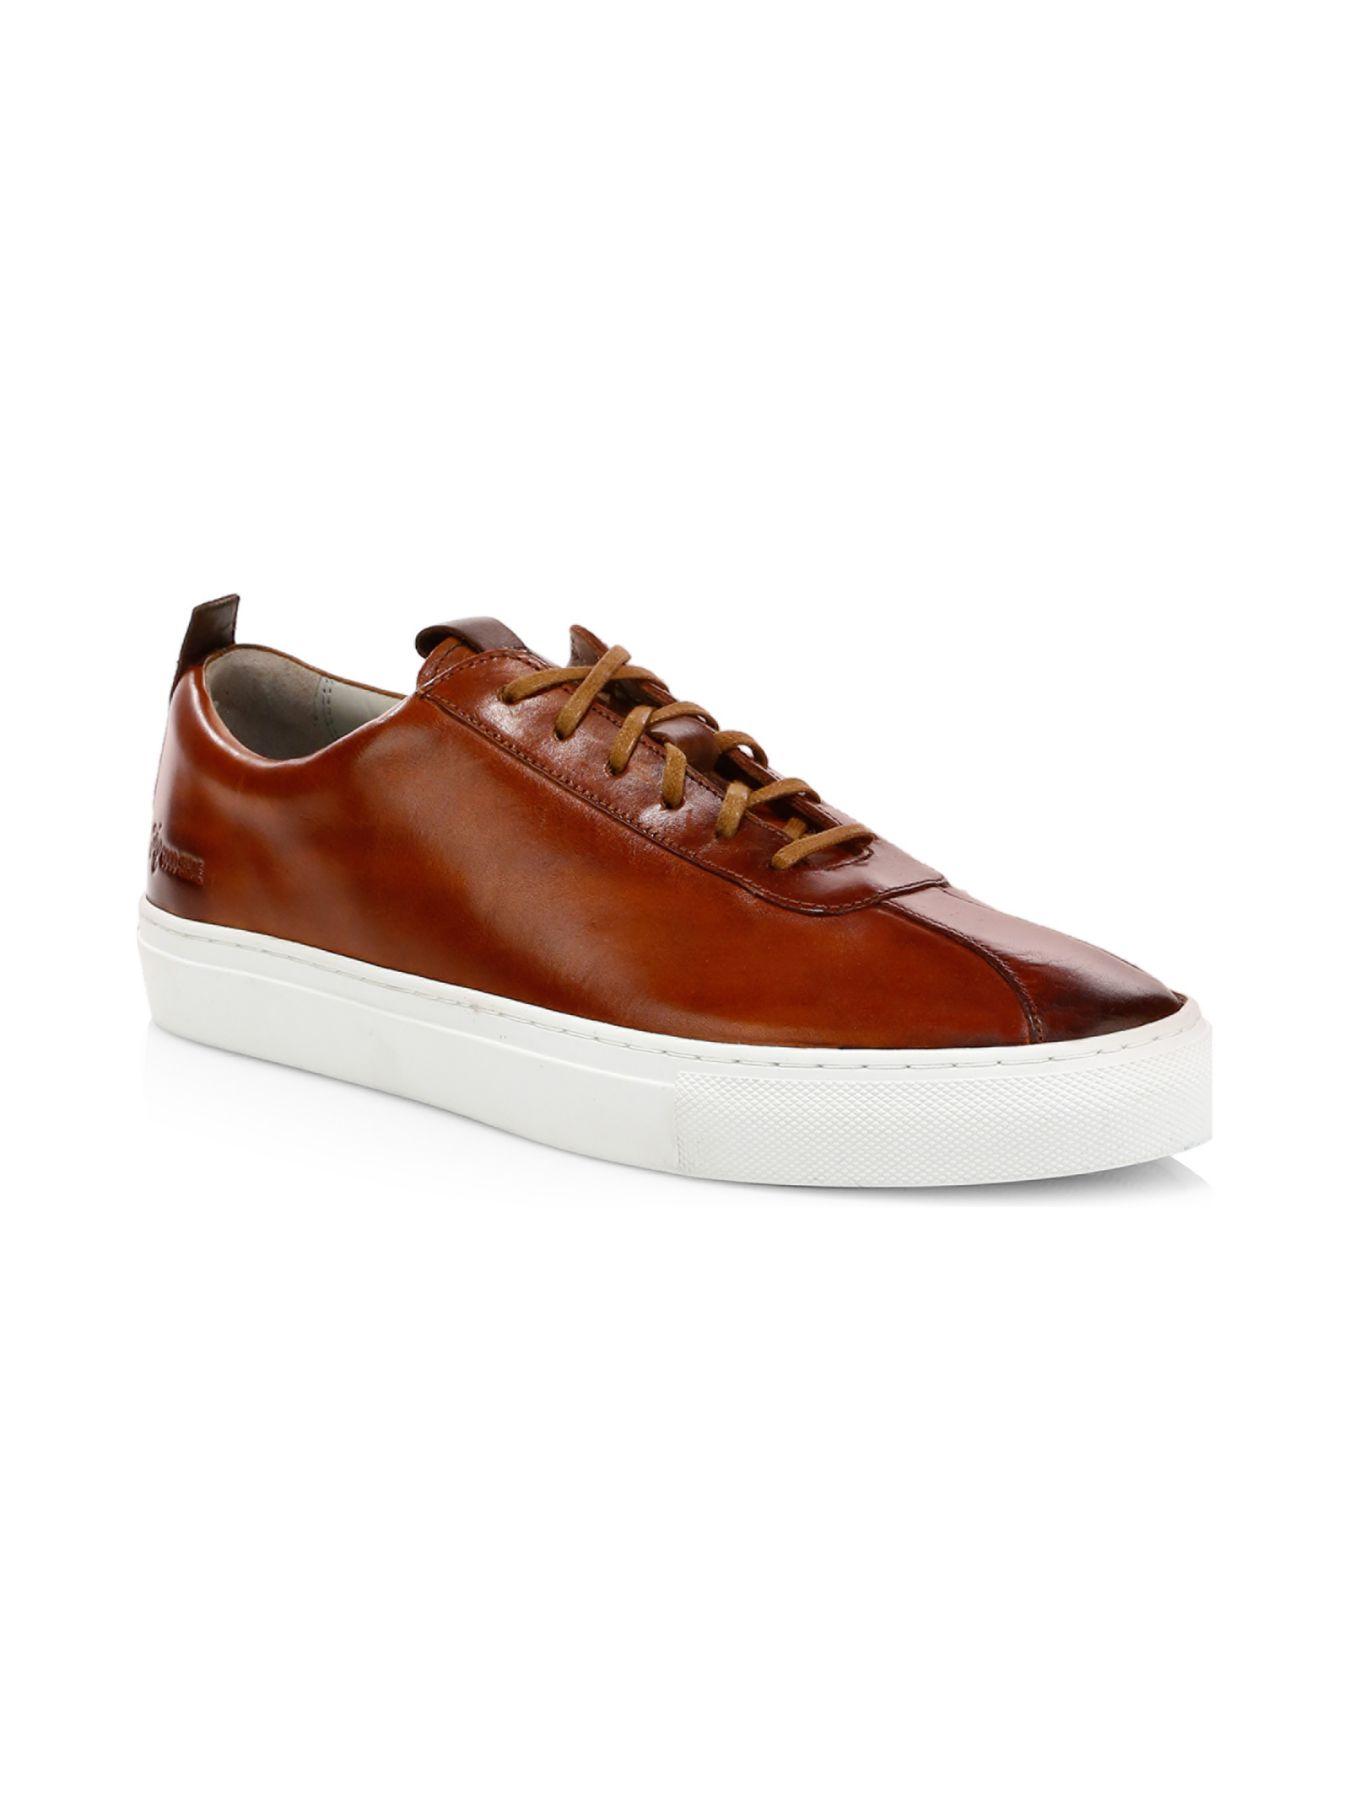 Grenson Sneaker 1 Leather Sneakers in Tan (Brown) for Men - Lyst